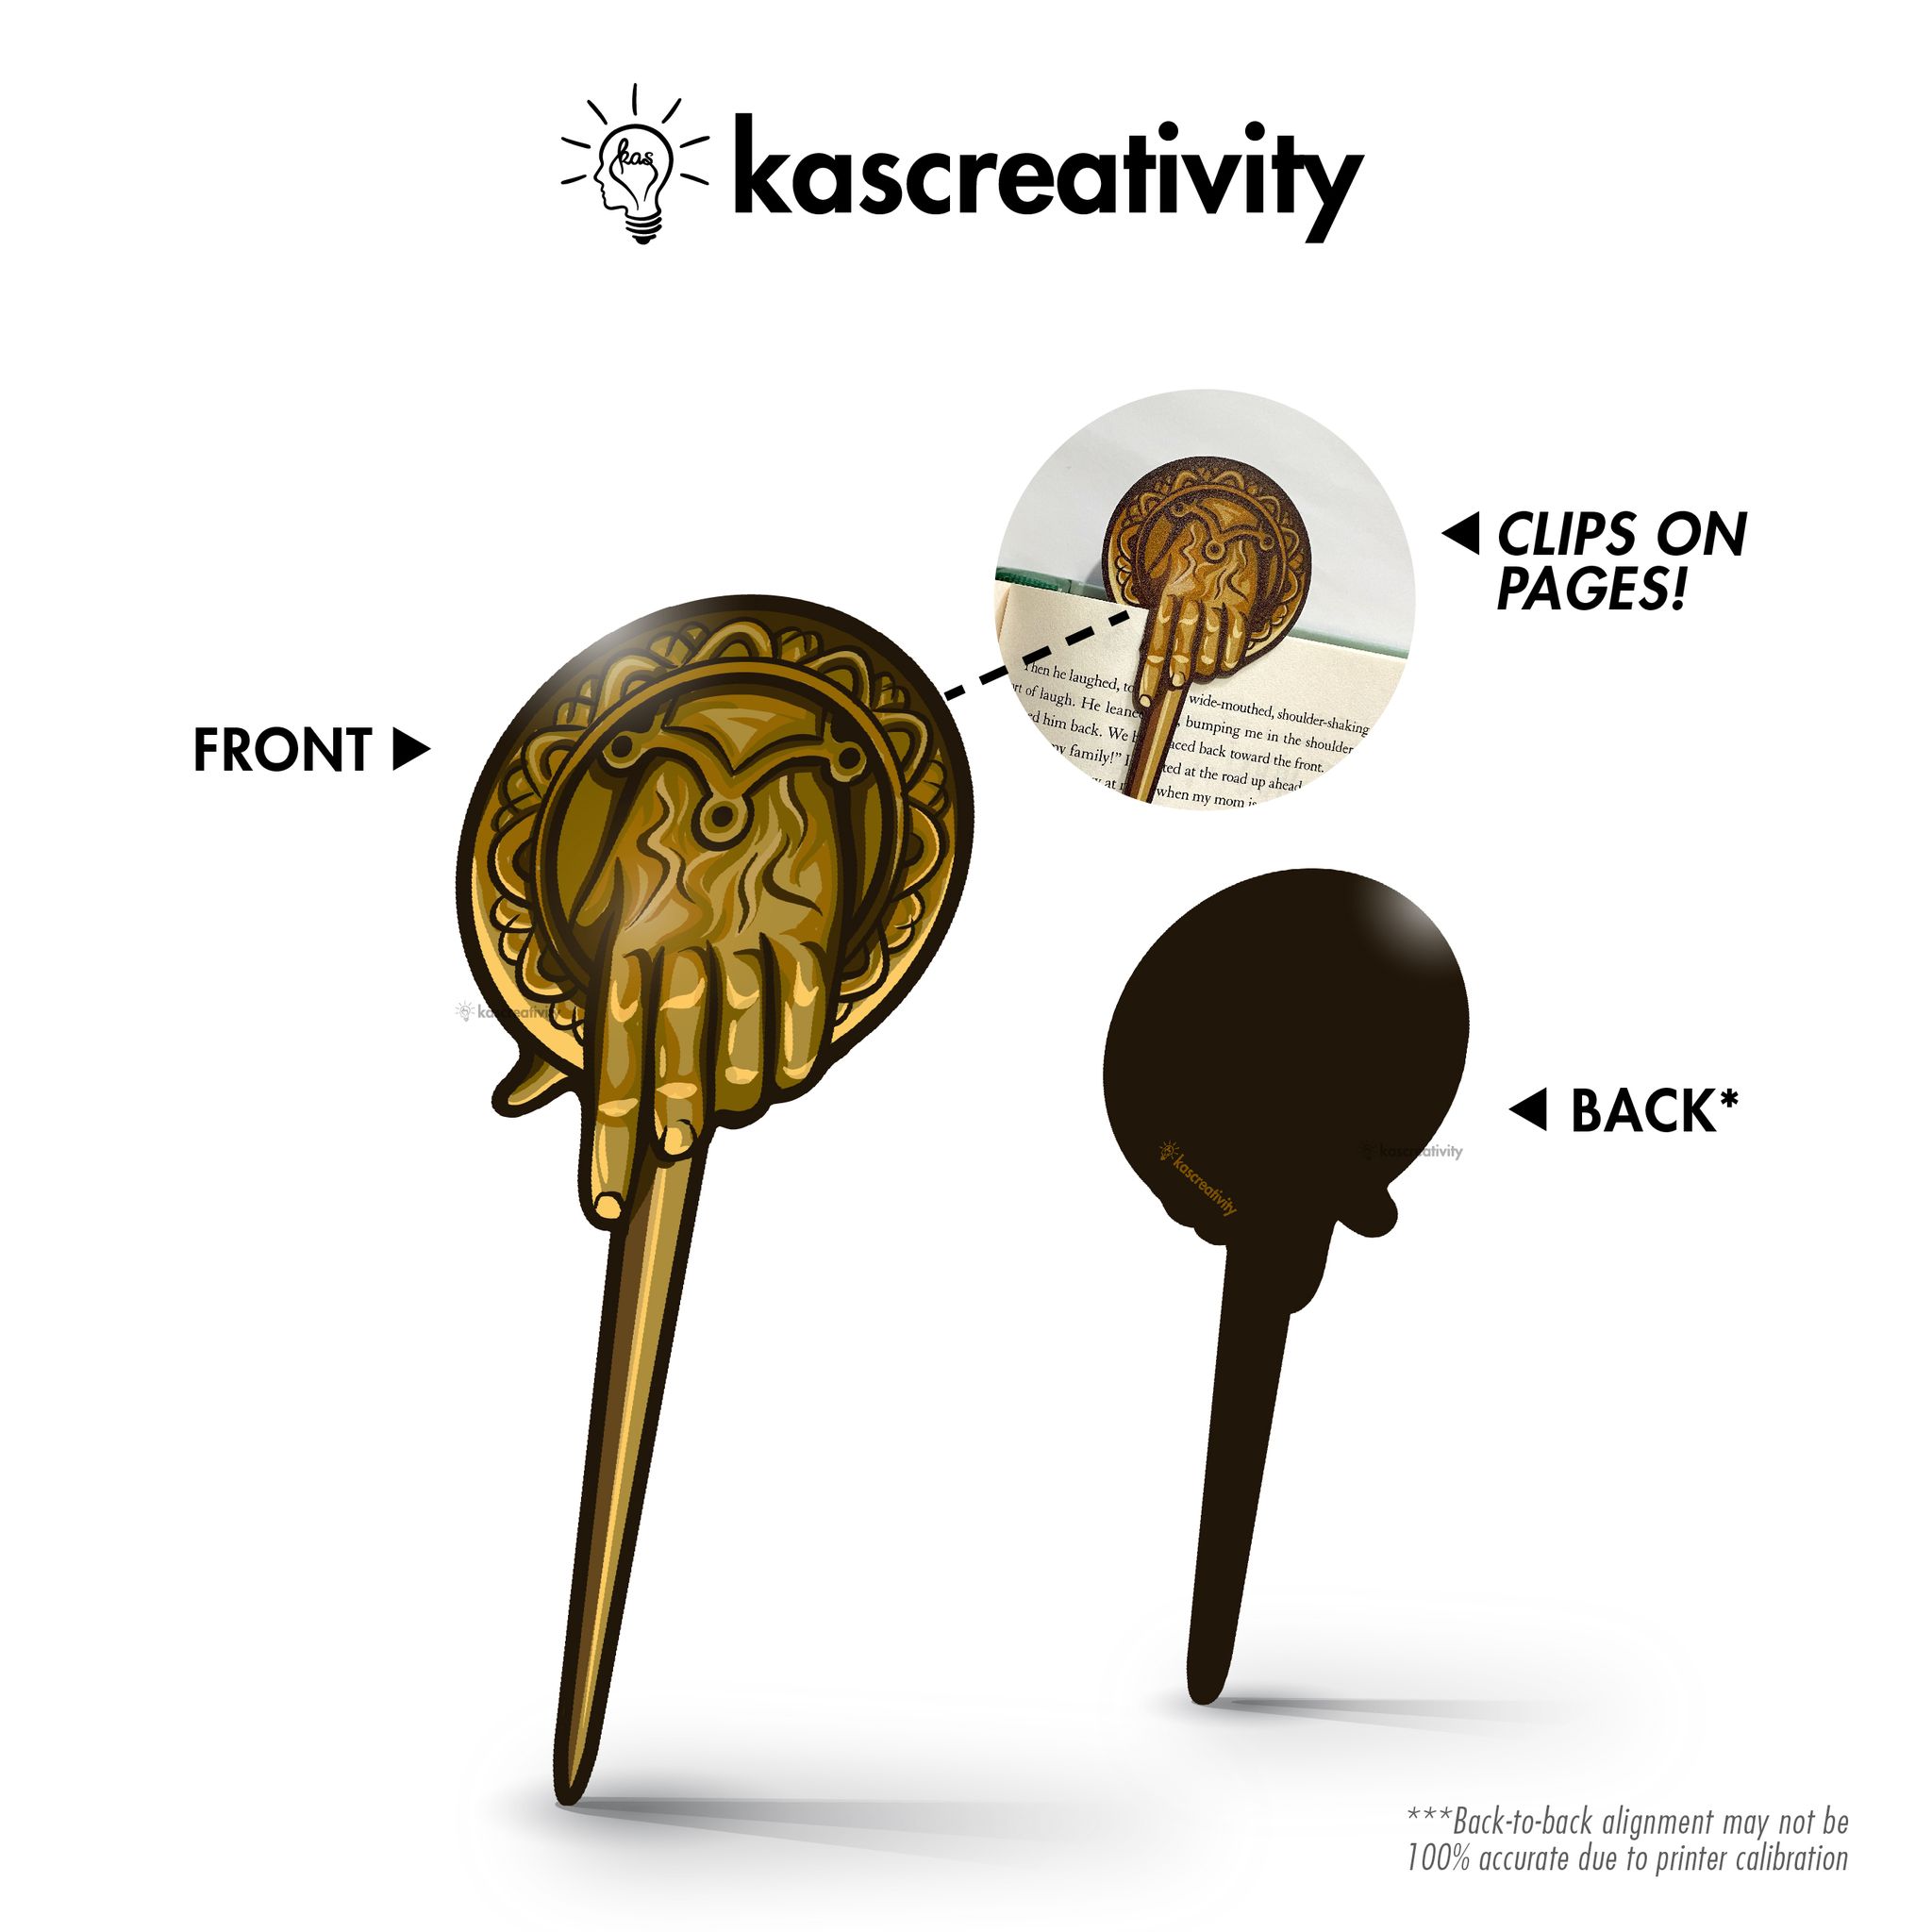 kascreativity